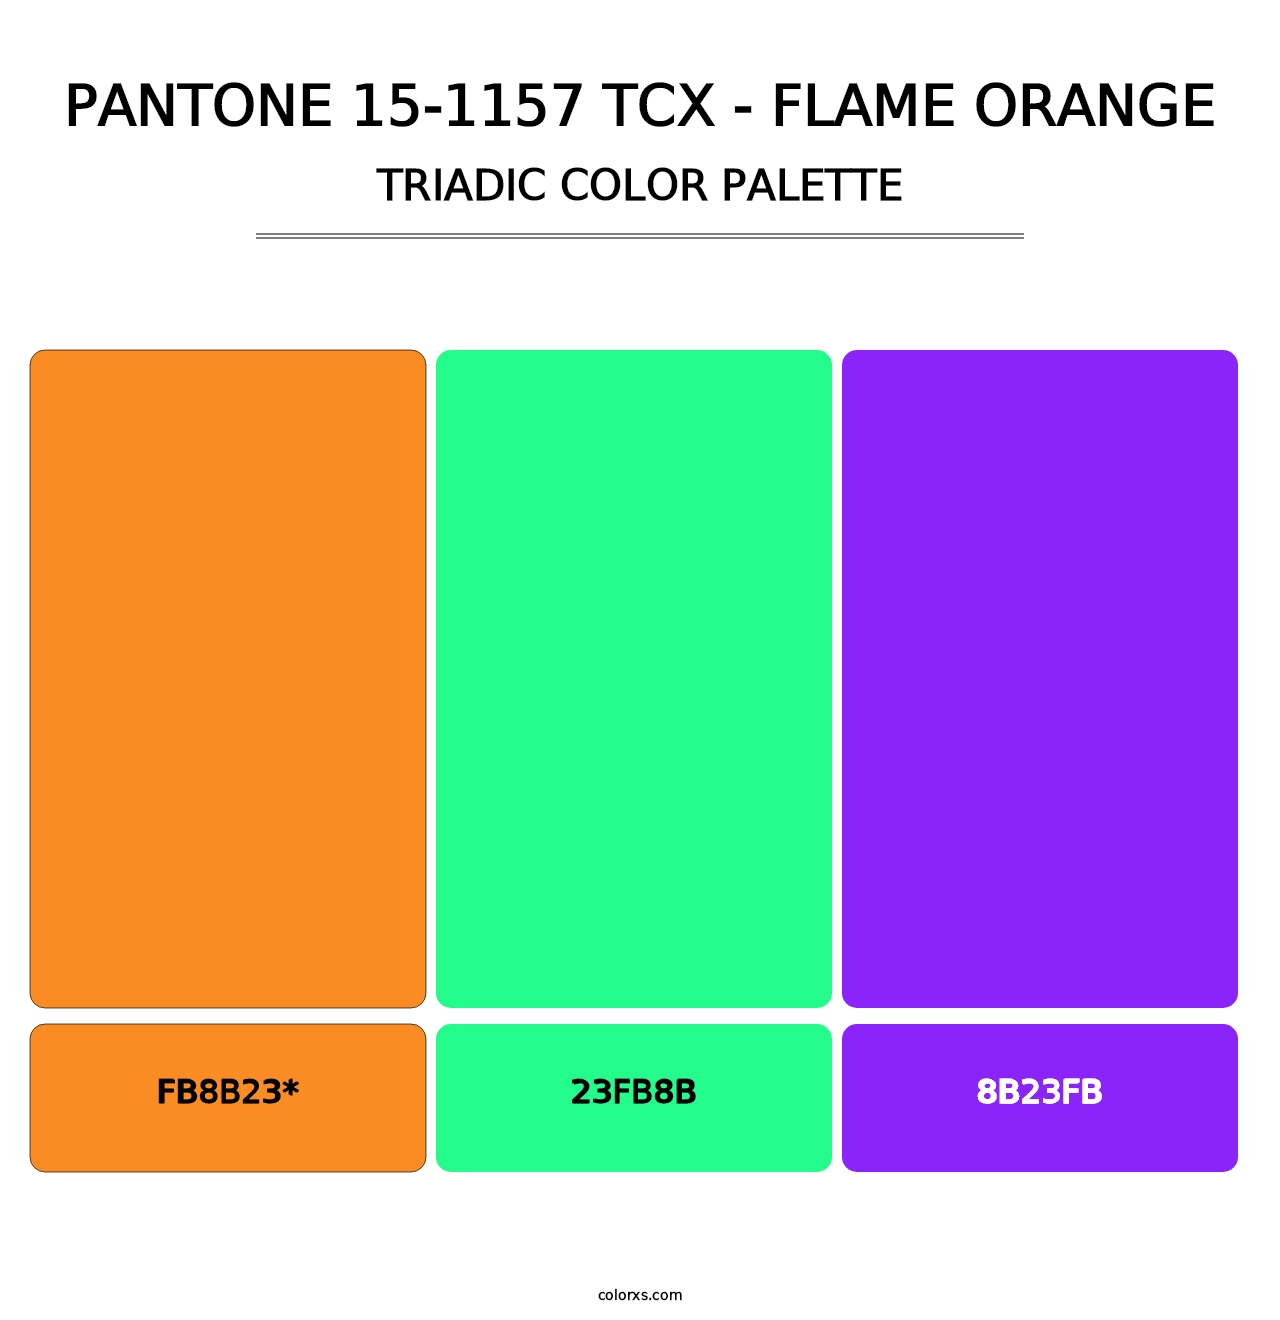 PANTONE 15-1157 TCX - Flame Orange - Triadic Color Palette